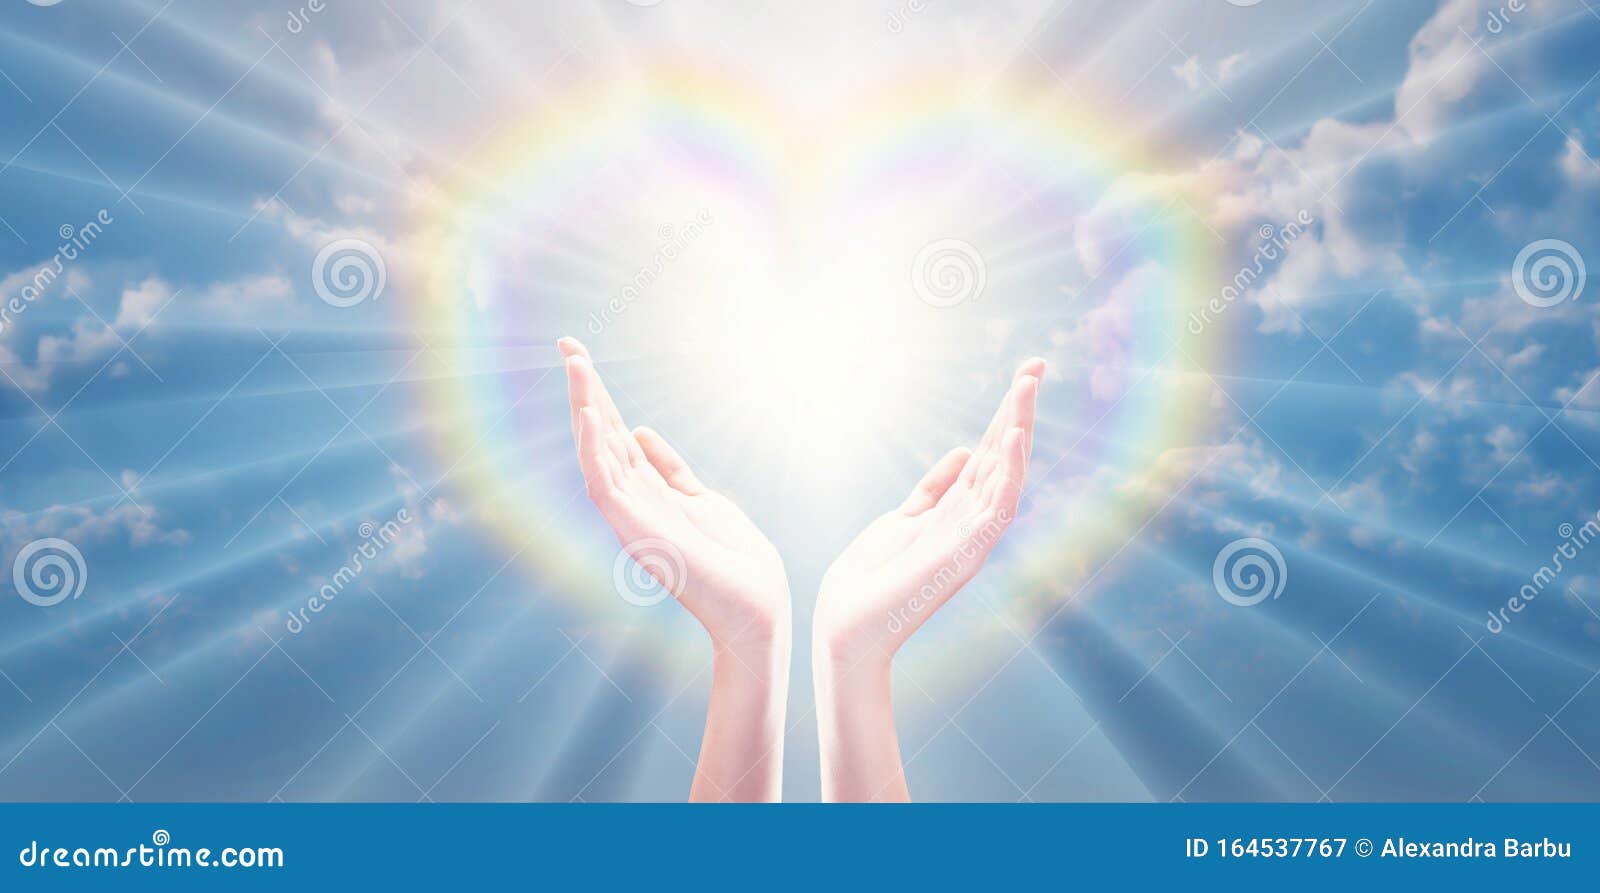 magical love healing universal energy, rainbow heart hands